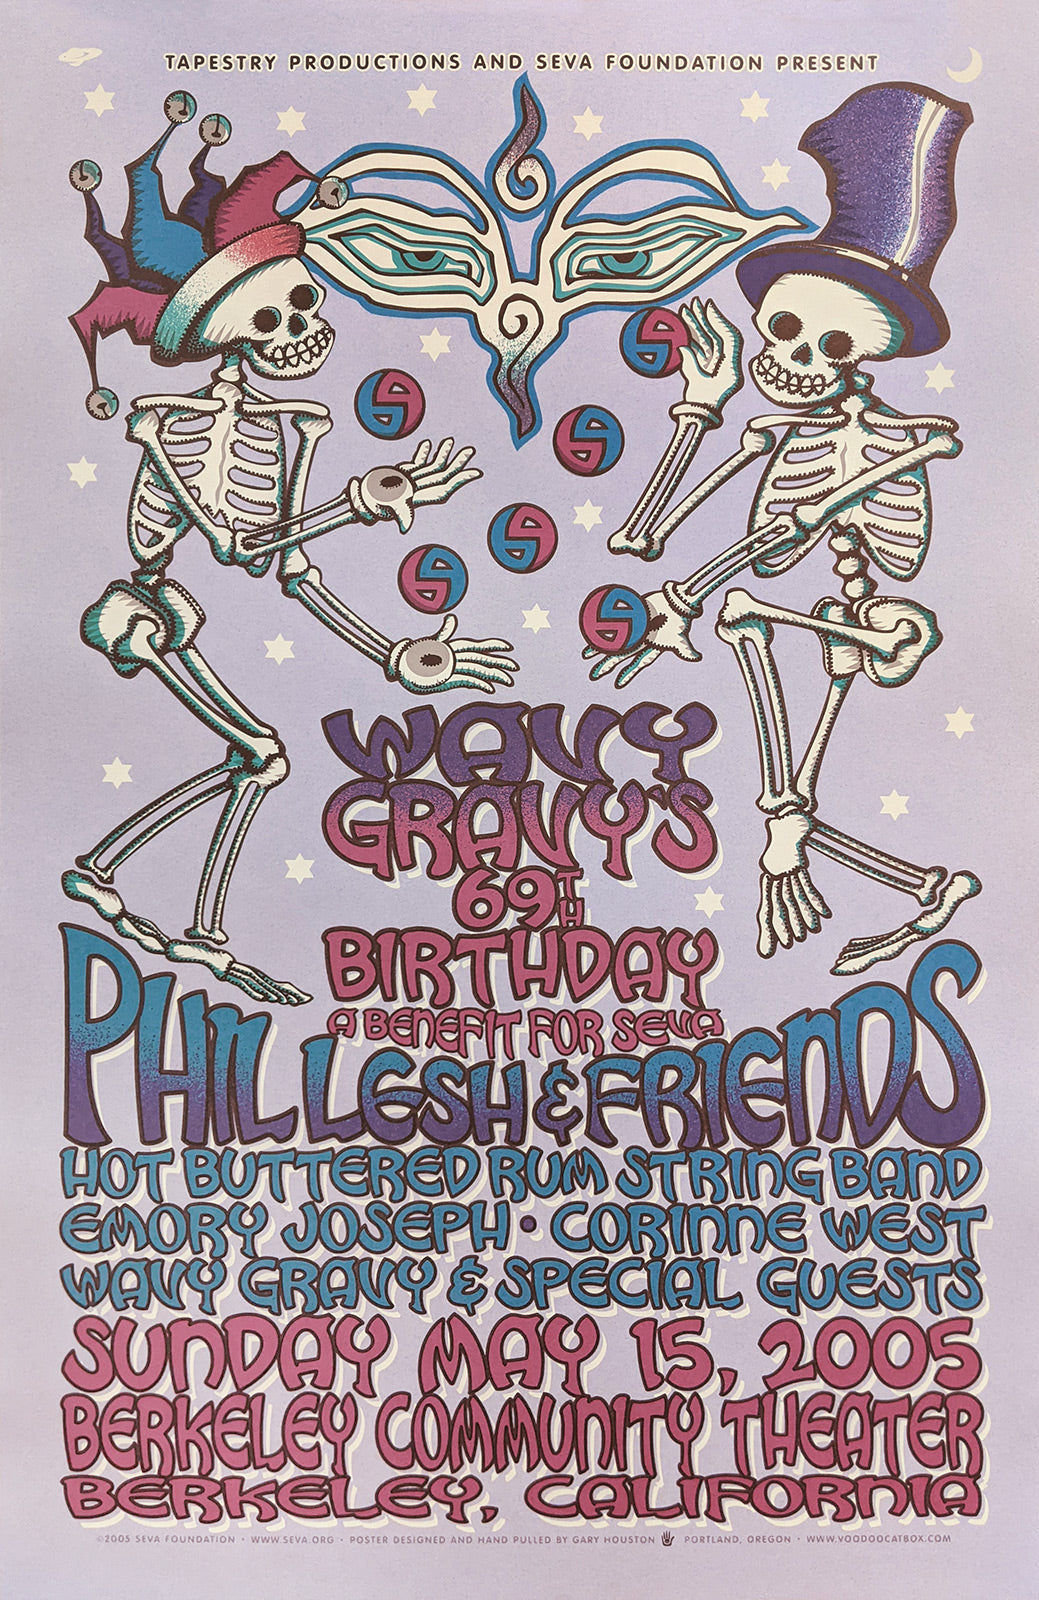 Phil Lesh & Friends #09 • Wavy Gravy B-Day